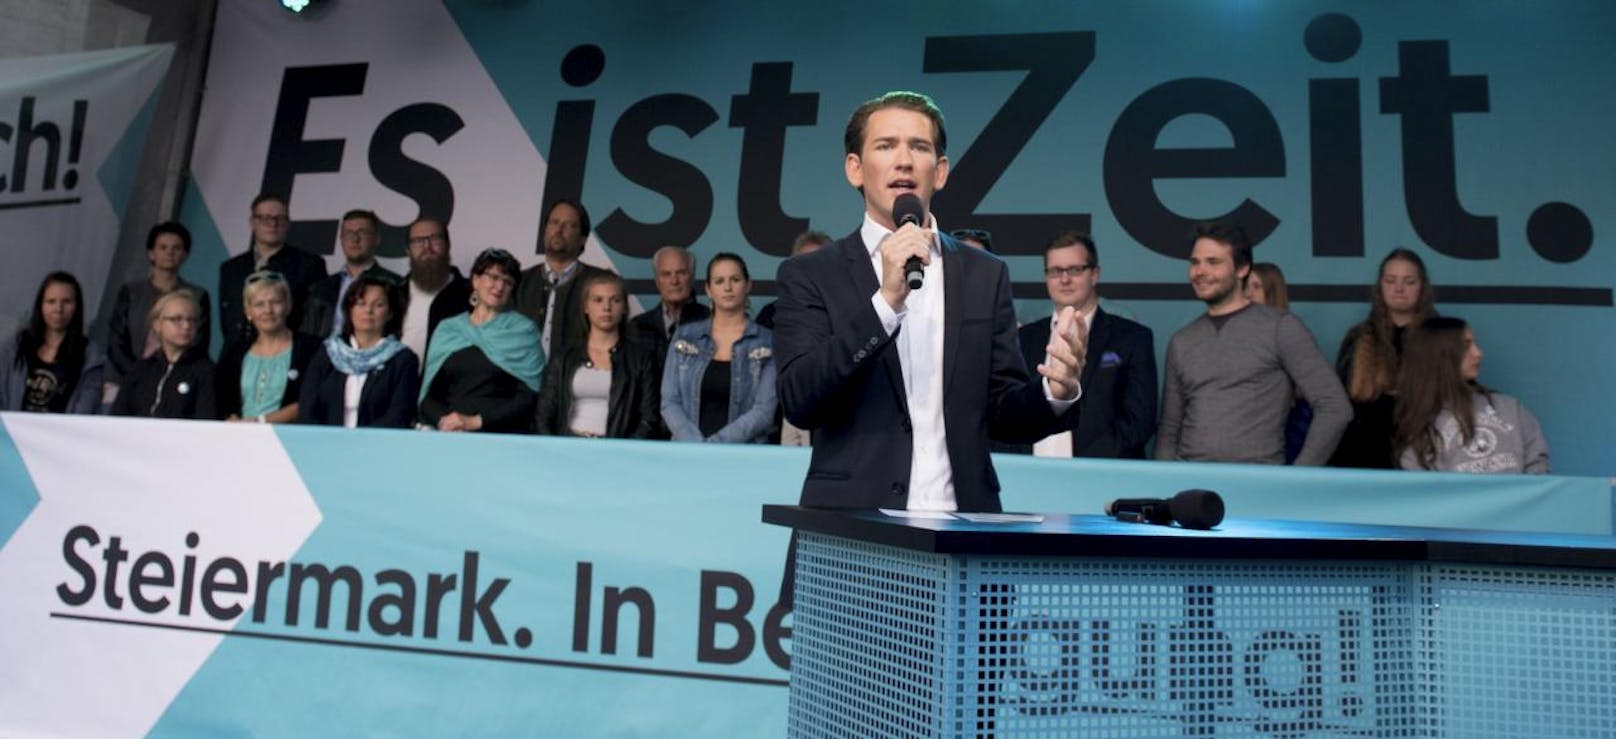 ÖVP-Chef Sebastian Kurz bei einer Wahlkampfveranstaltung in Graz am 4. September 2017.